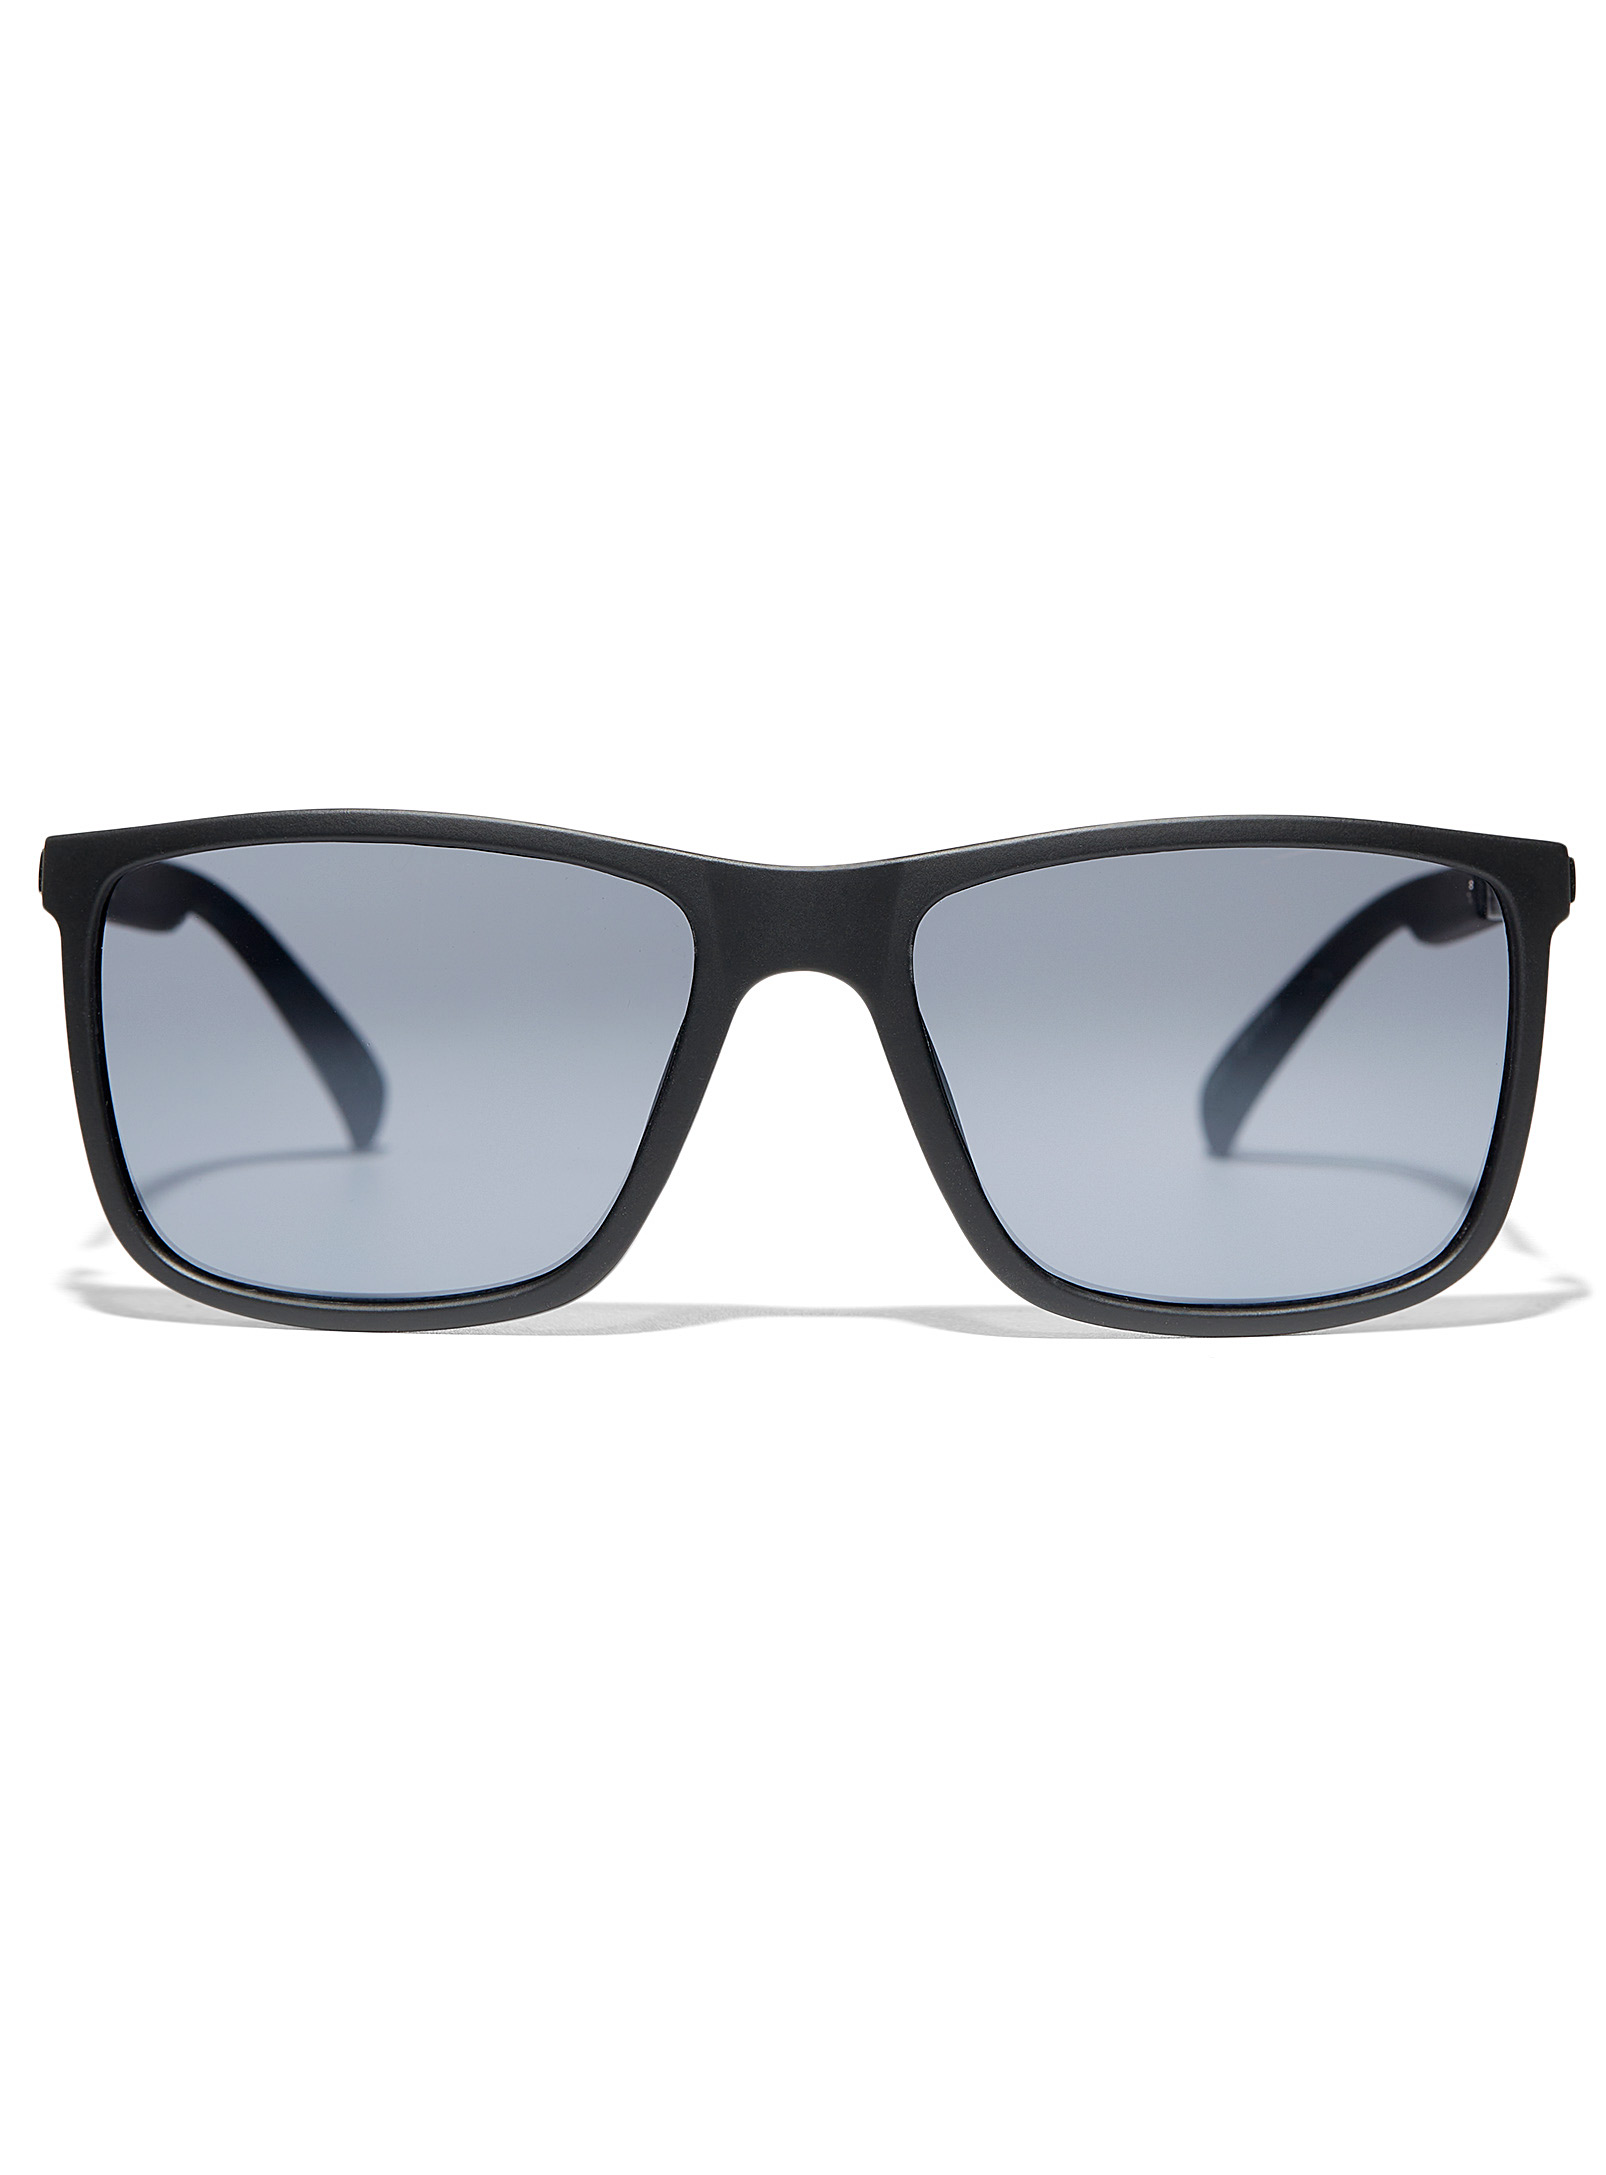 Le 31 - Men's Bentley square sunglasses